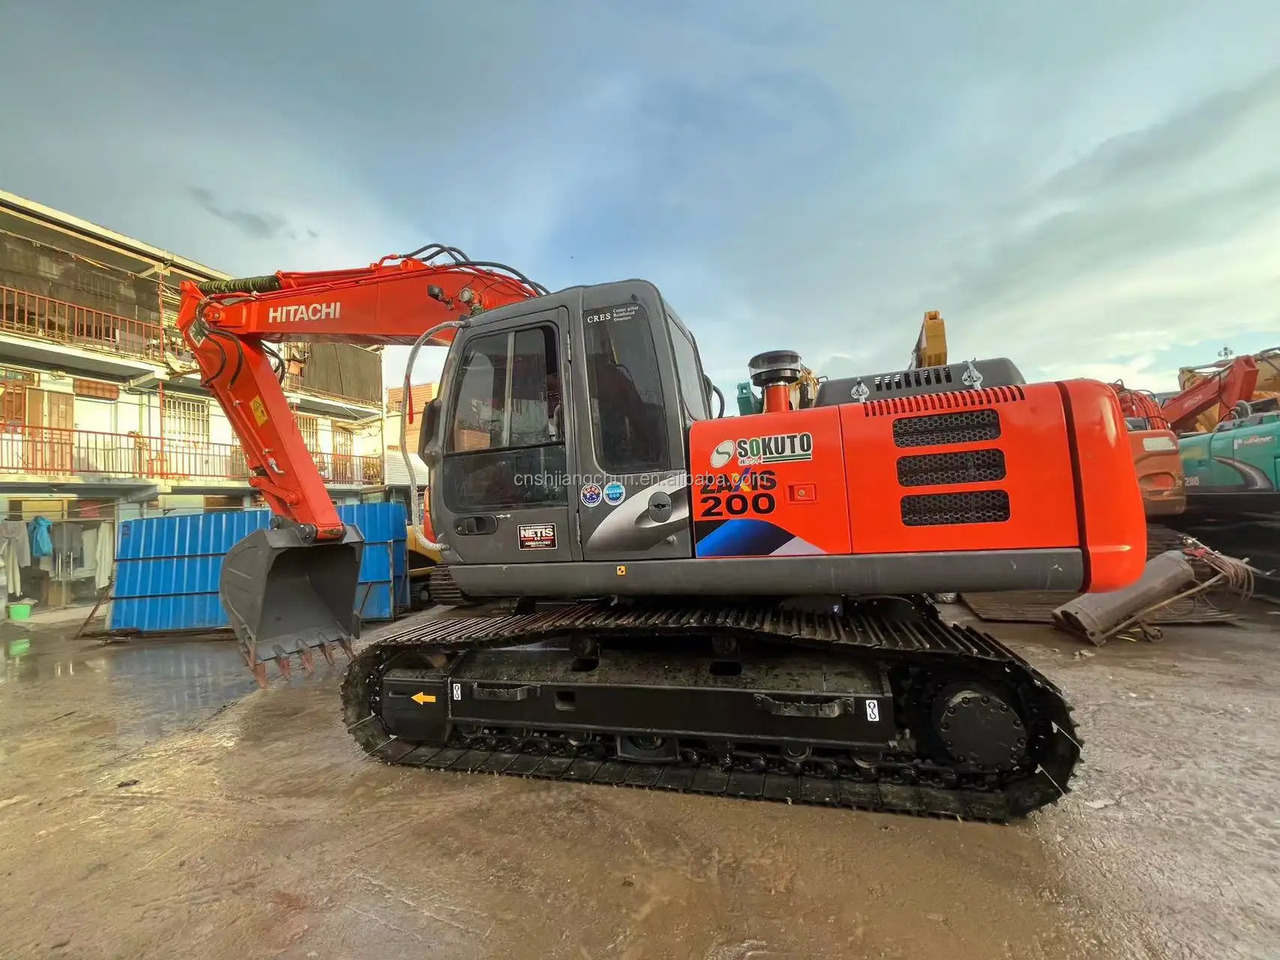 Escavadora de rastos high cost performance second hand  Hitachi ZX200-3G hydraulic crawler excavator 20 ton excavating machinery: foto 5